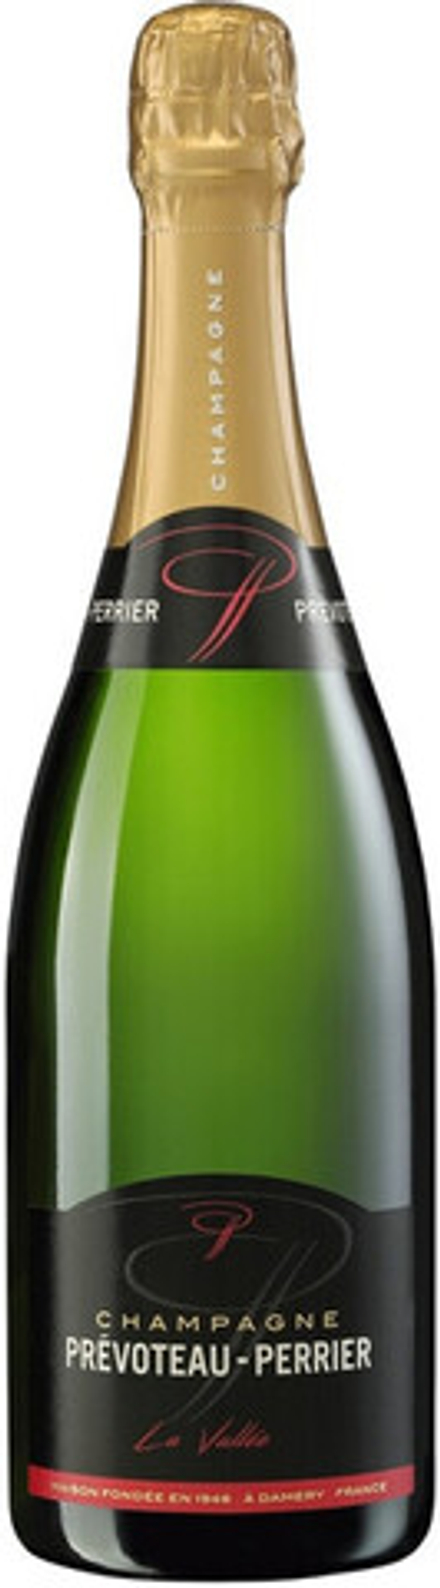 Шампанское Champagne Prevoteau-Perrier La Vallee Brut, 0,75 л.